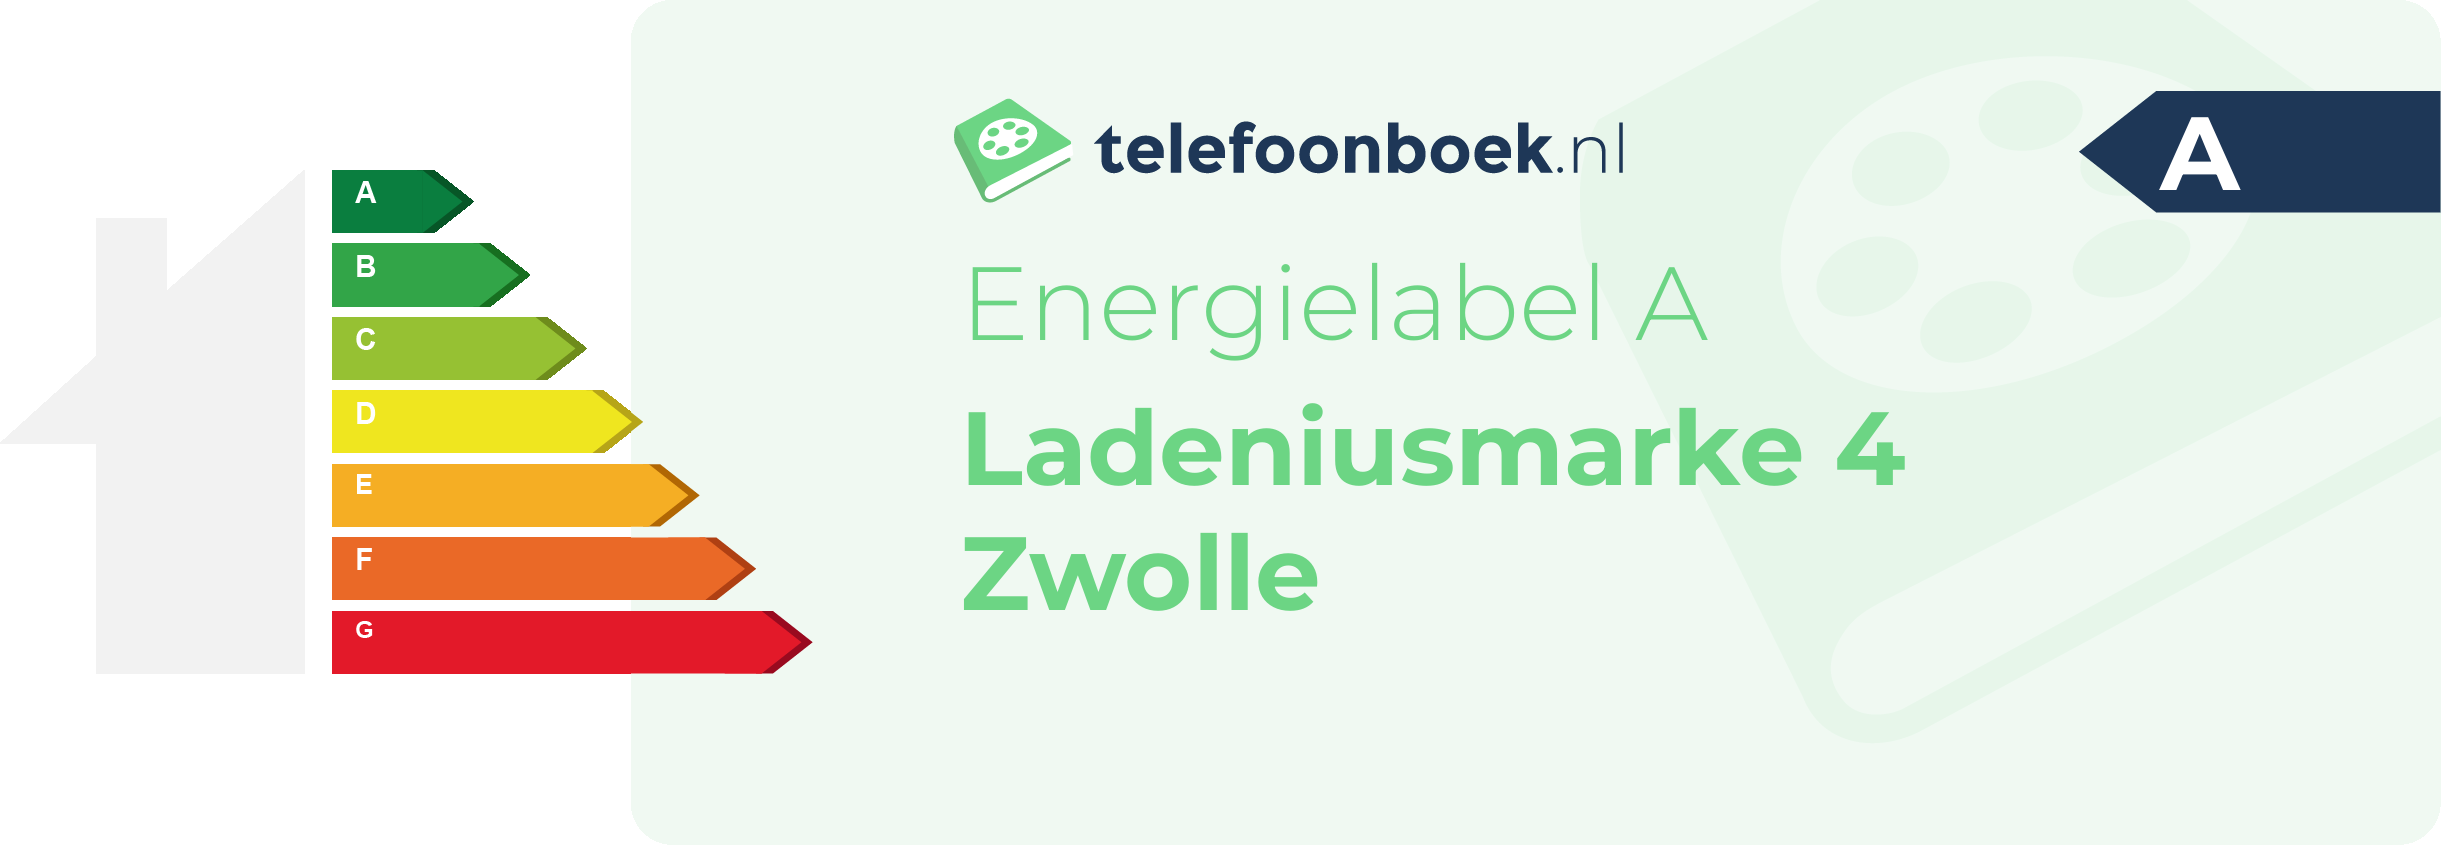 Energielabel Ladeniusmarke 4 Zwolle